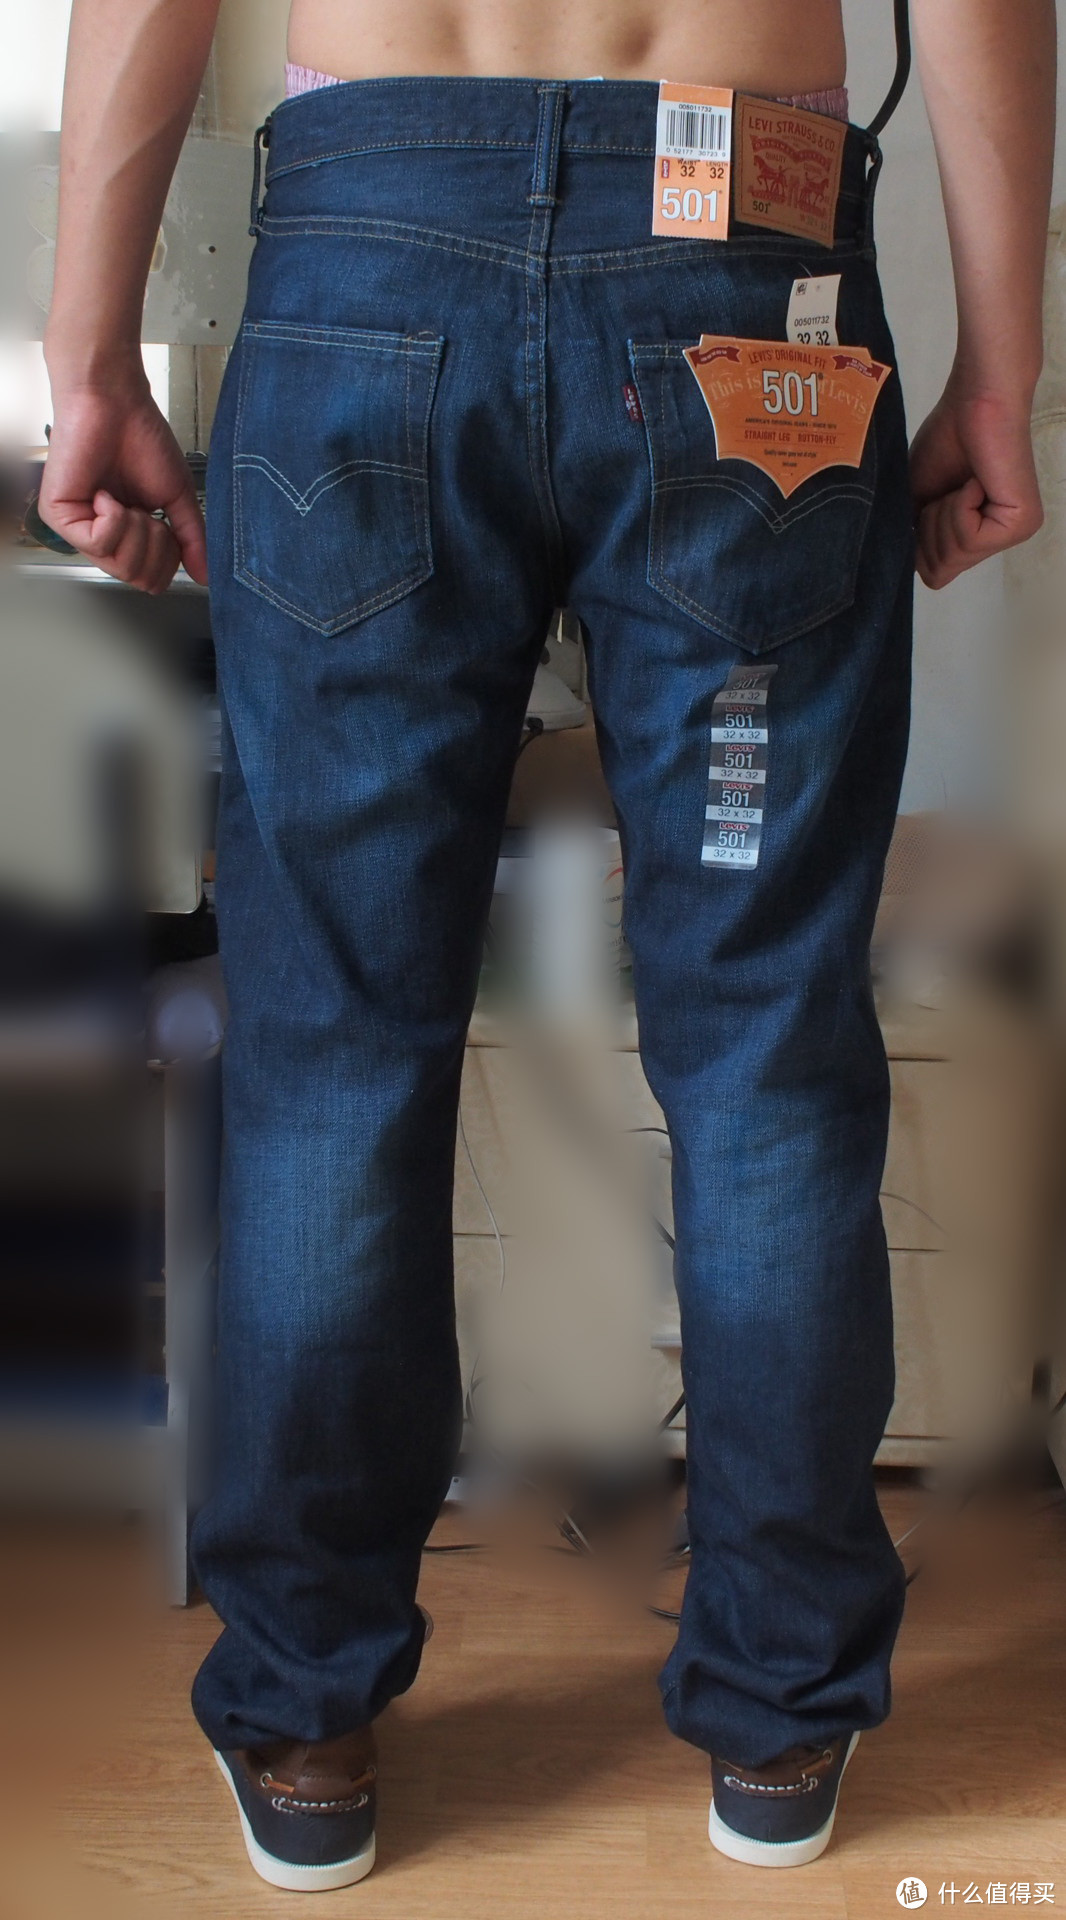 Levis 李维斯官网 501® Original Fit Jeans 牛仔裤白菜，重点说尺码